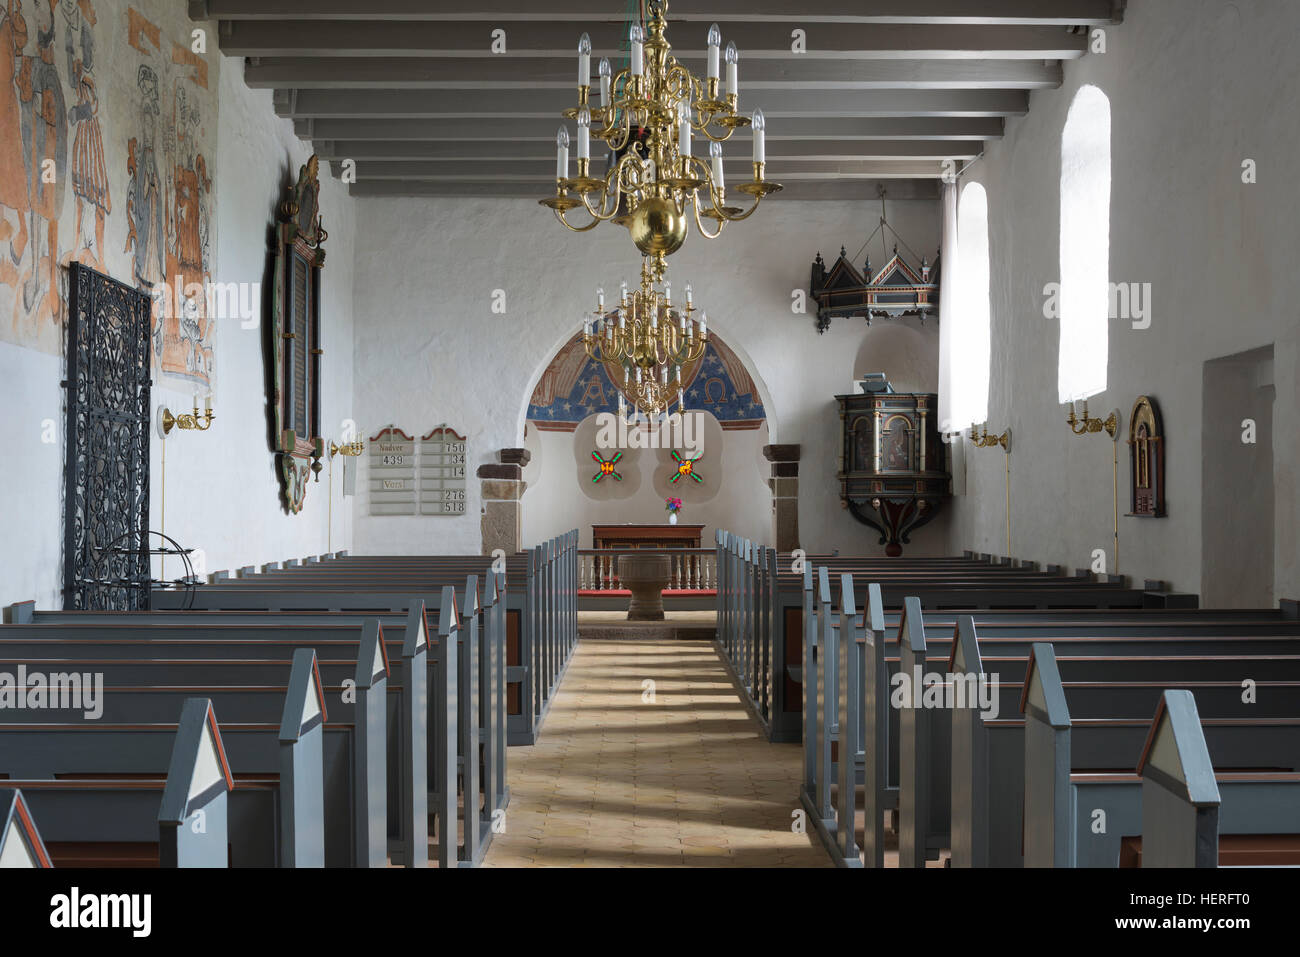 Nave con ábside, en el interior, iglesia románica, Staby, Ulfborg, Midtjylland, Dinamarca Foto de stock